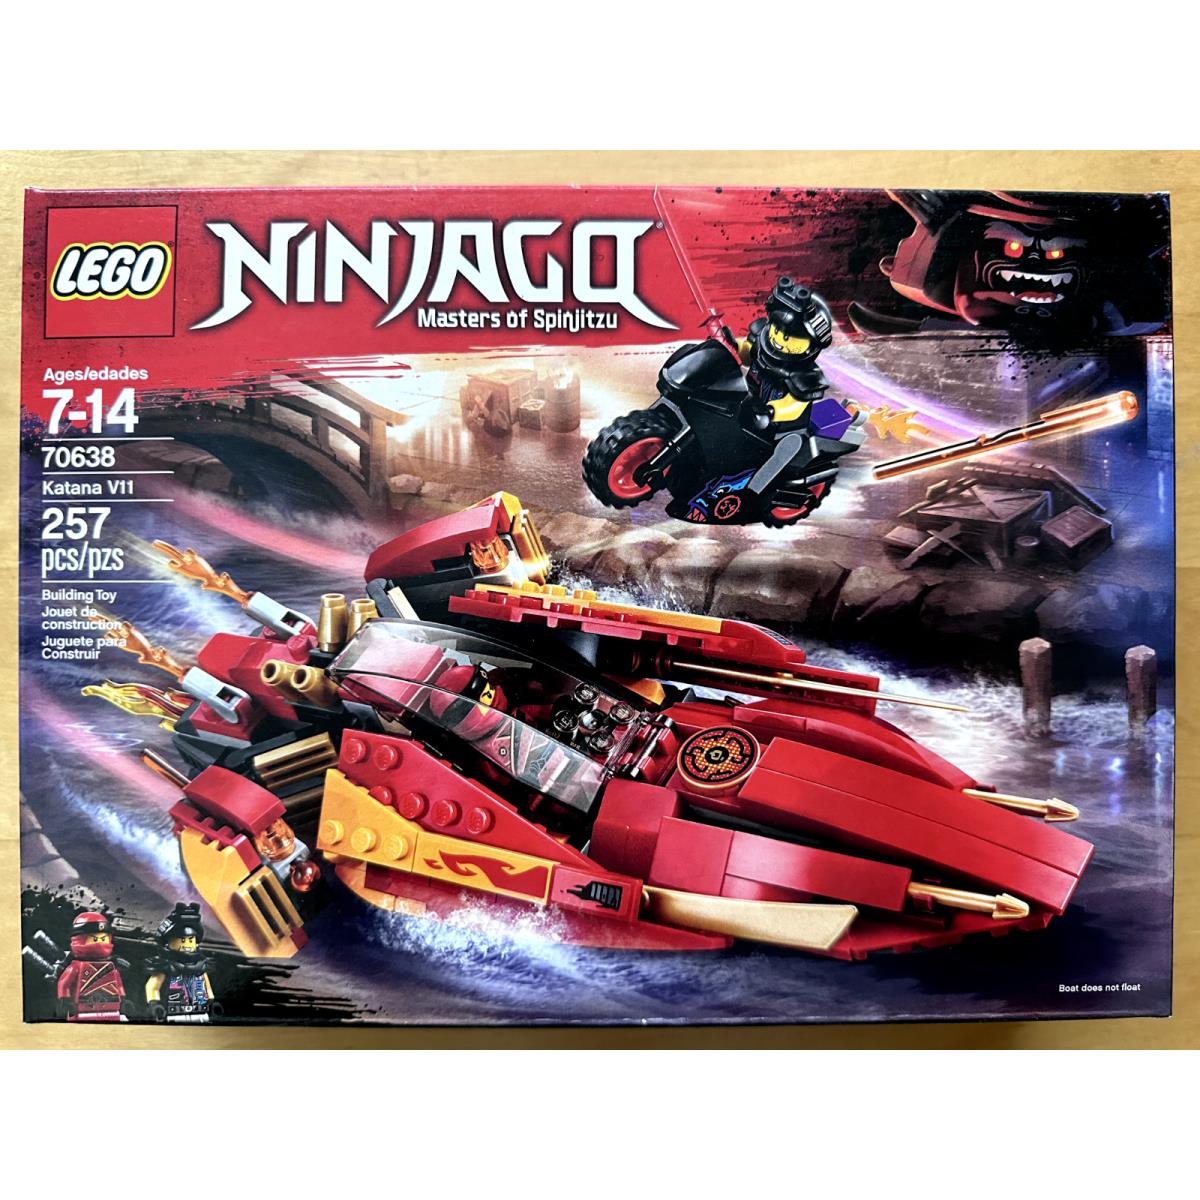 Lego Ninjago 70638 Katana V11 Nisb